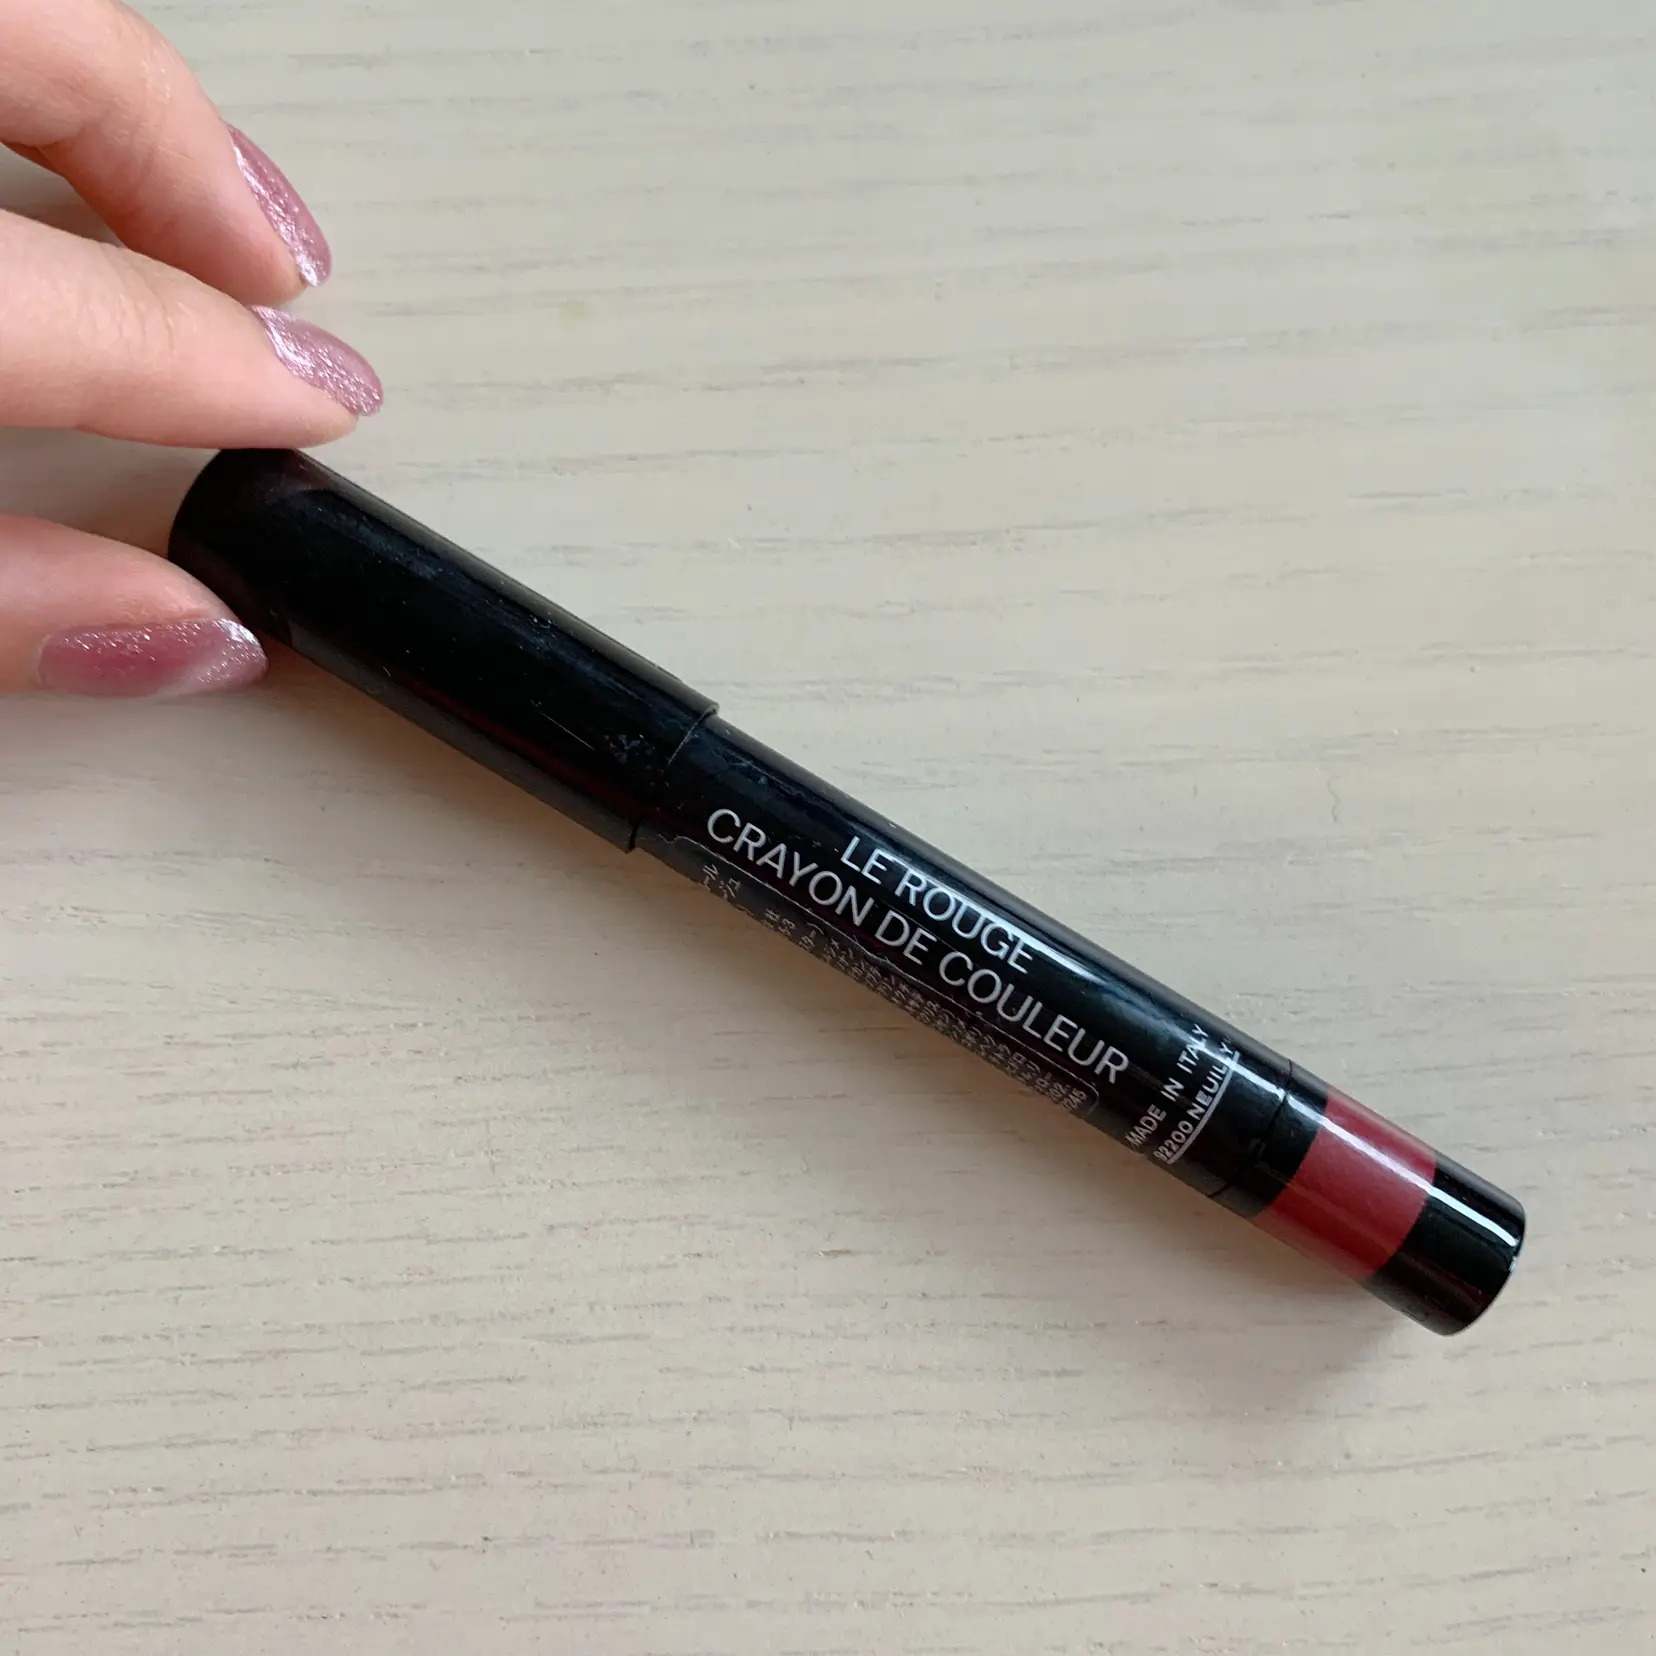 Brighten Up Your World with Chanel's Le Rouge Crayon de Couleur